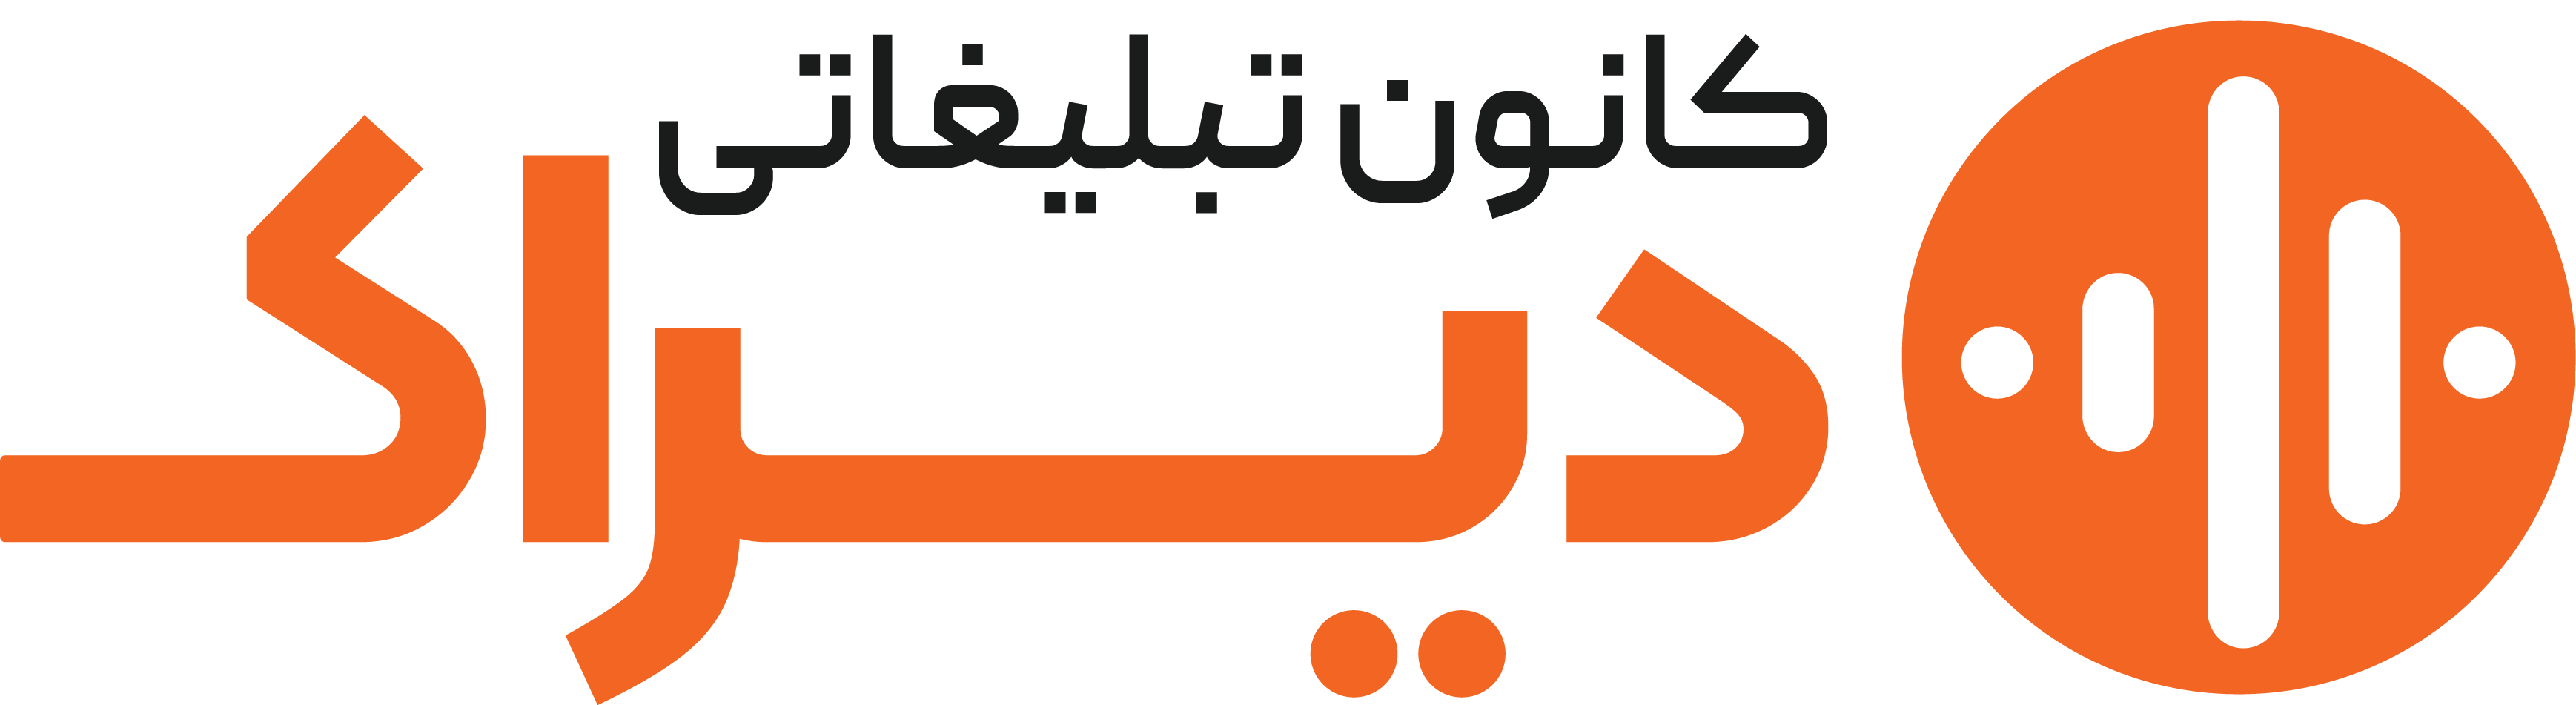 لوگو فارسی جدید دیراک - مشکی